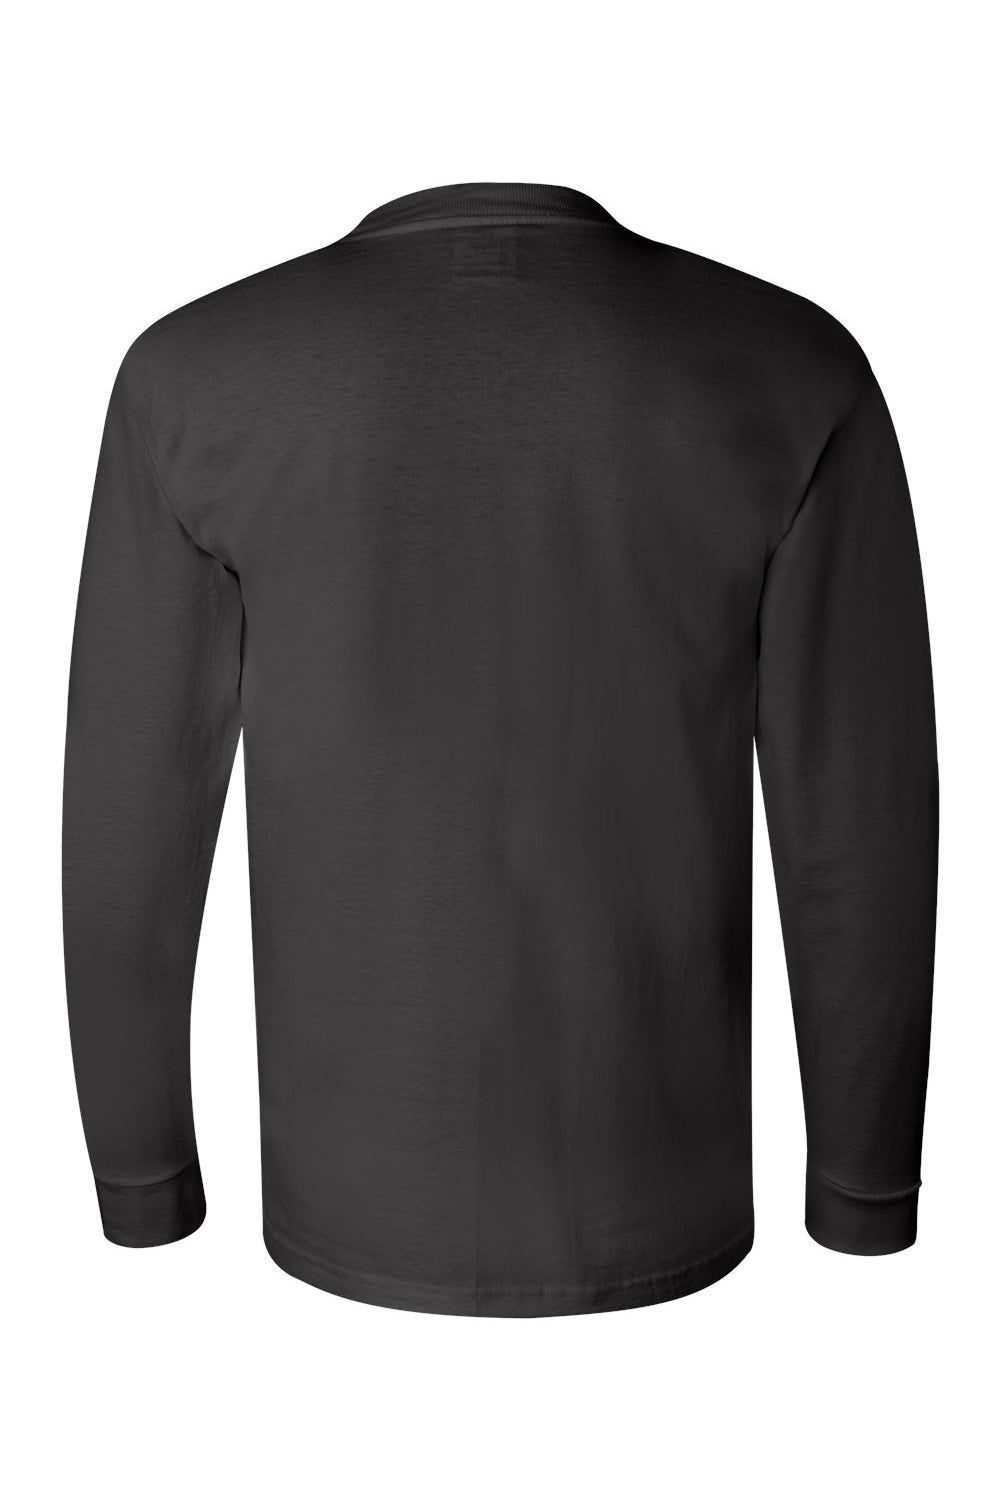 Bayside BA6100 Mens USA Made Long Sleeve Crewneck T-Shirt Black Flat Back